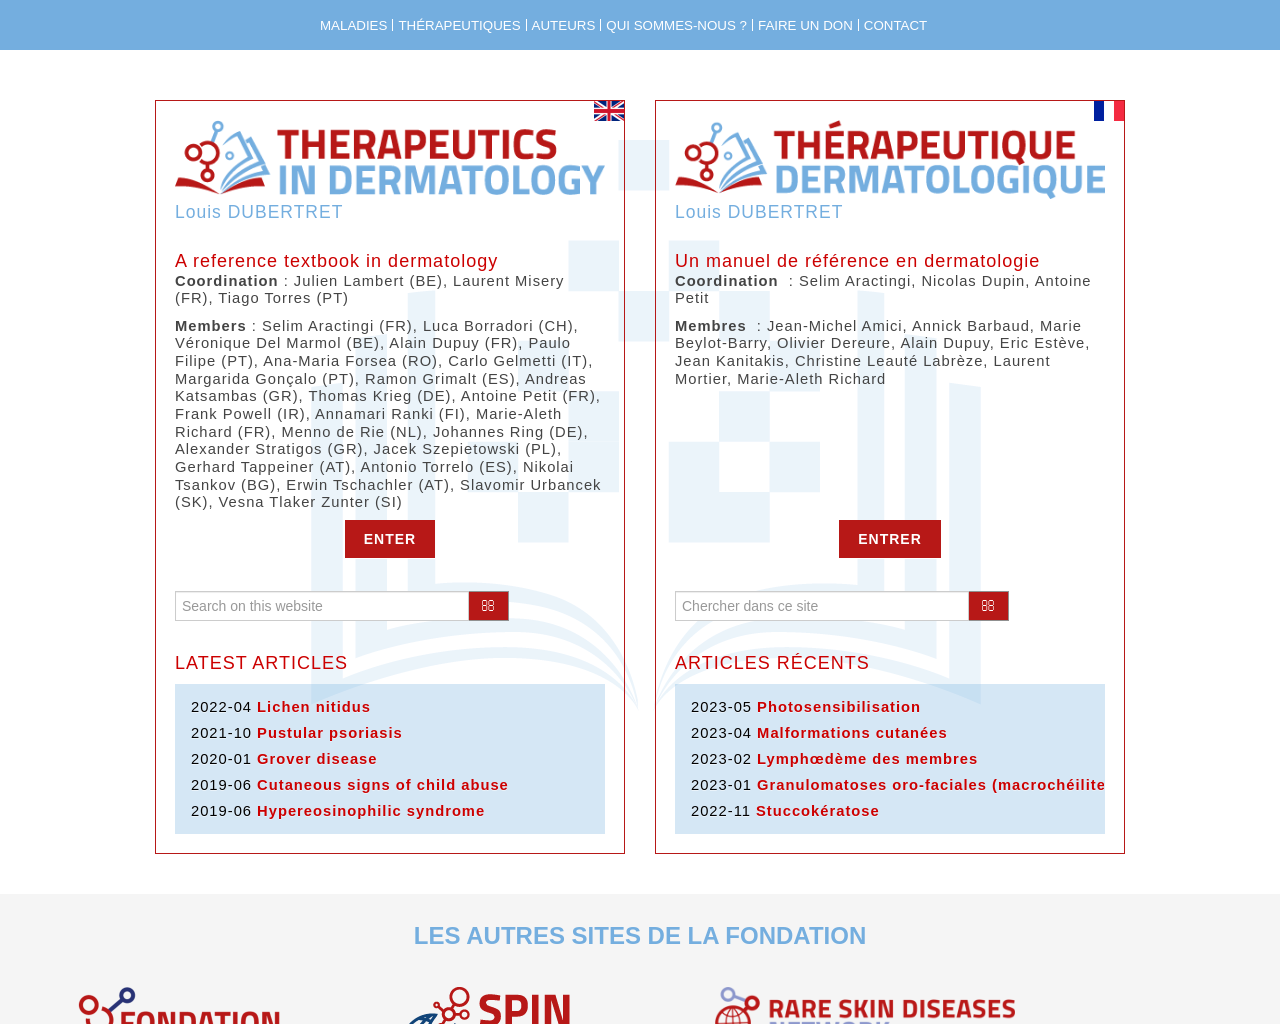 www.therapeutique-dermatologique.org